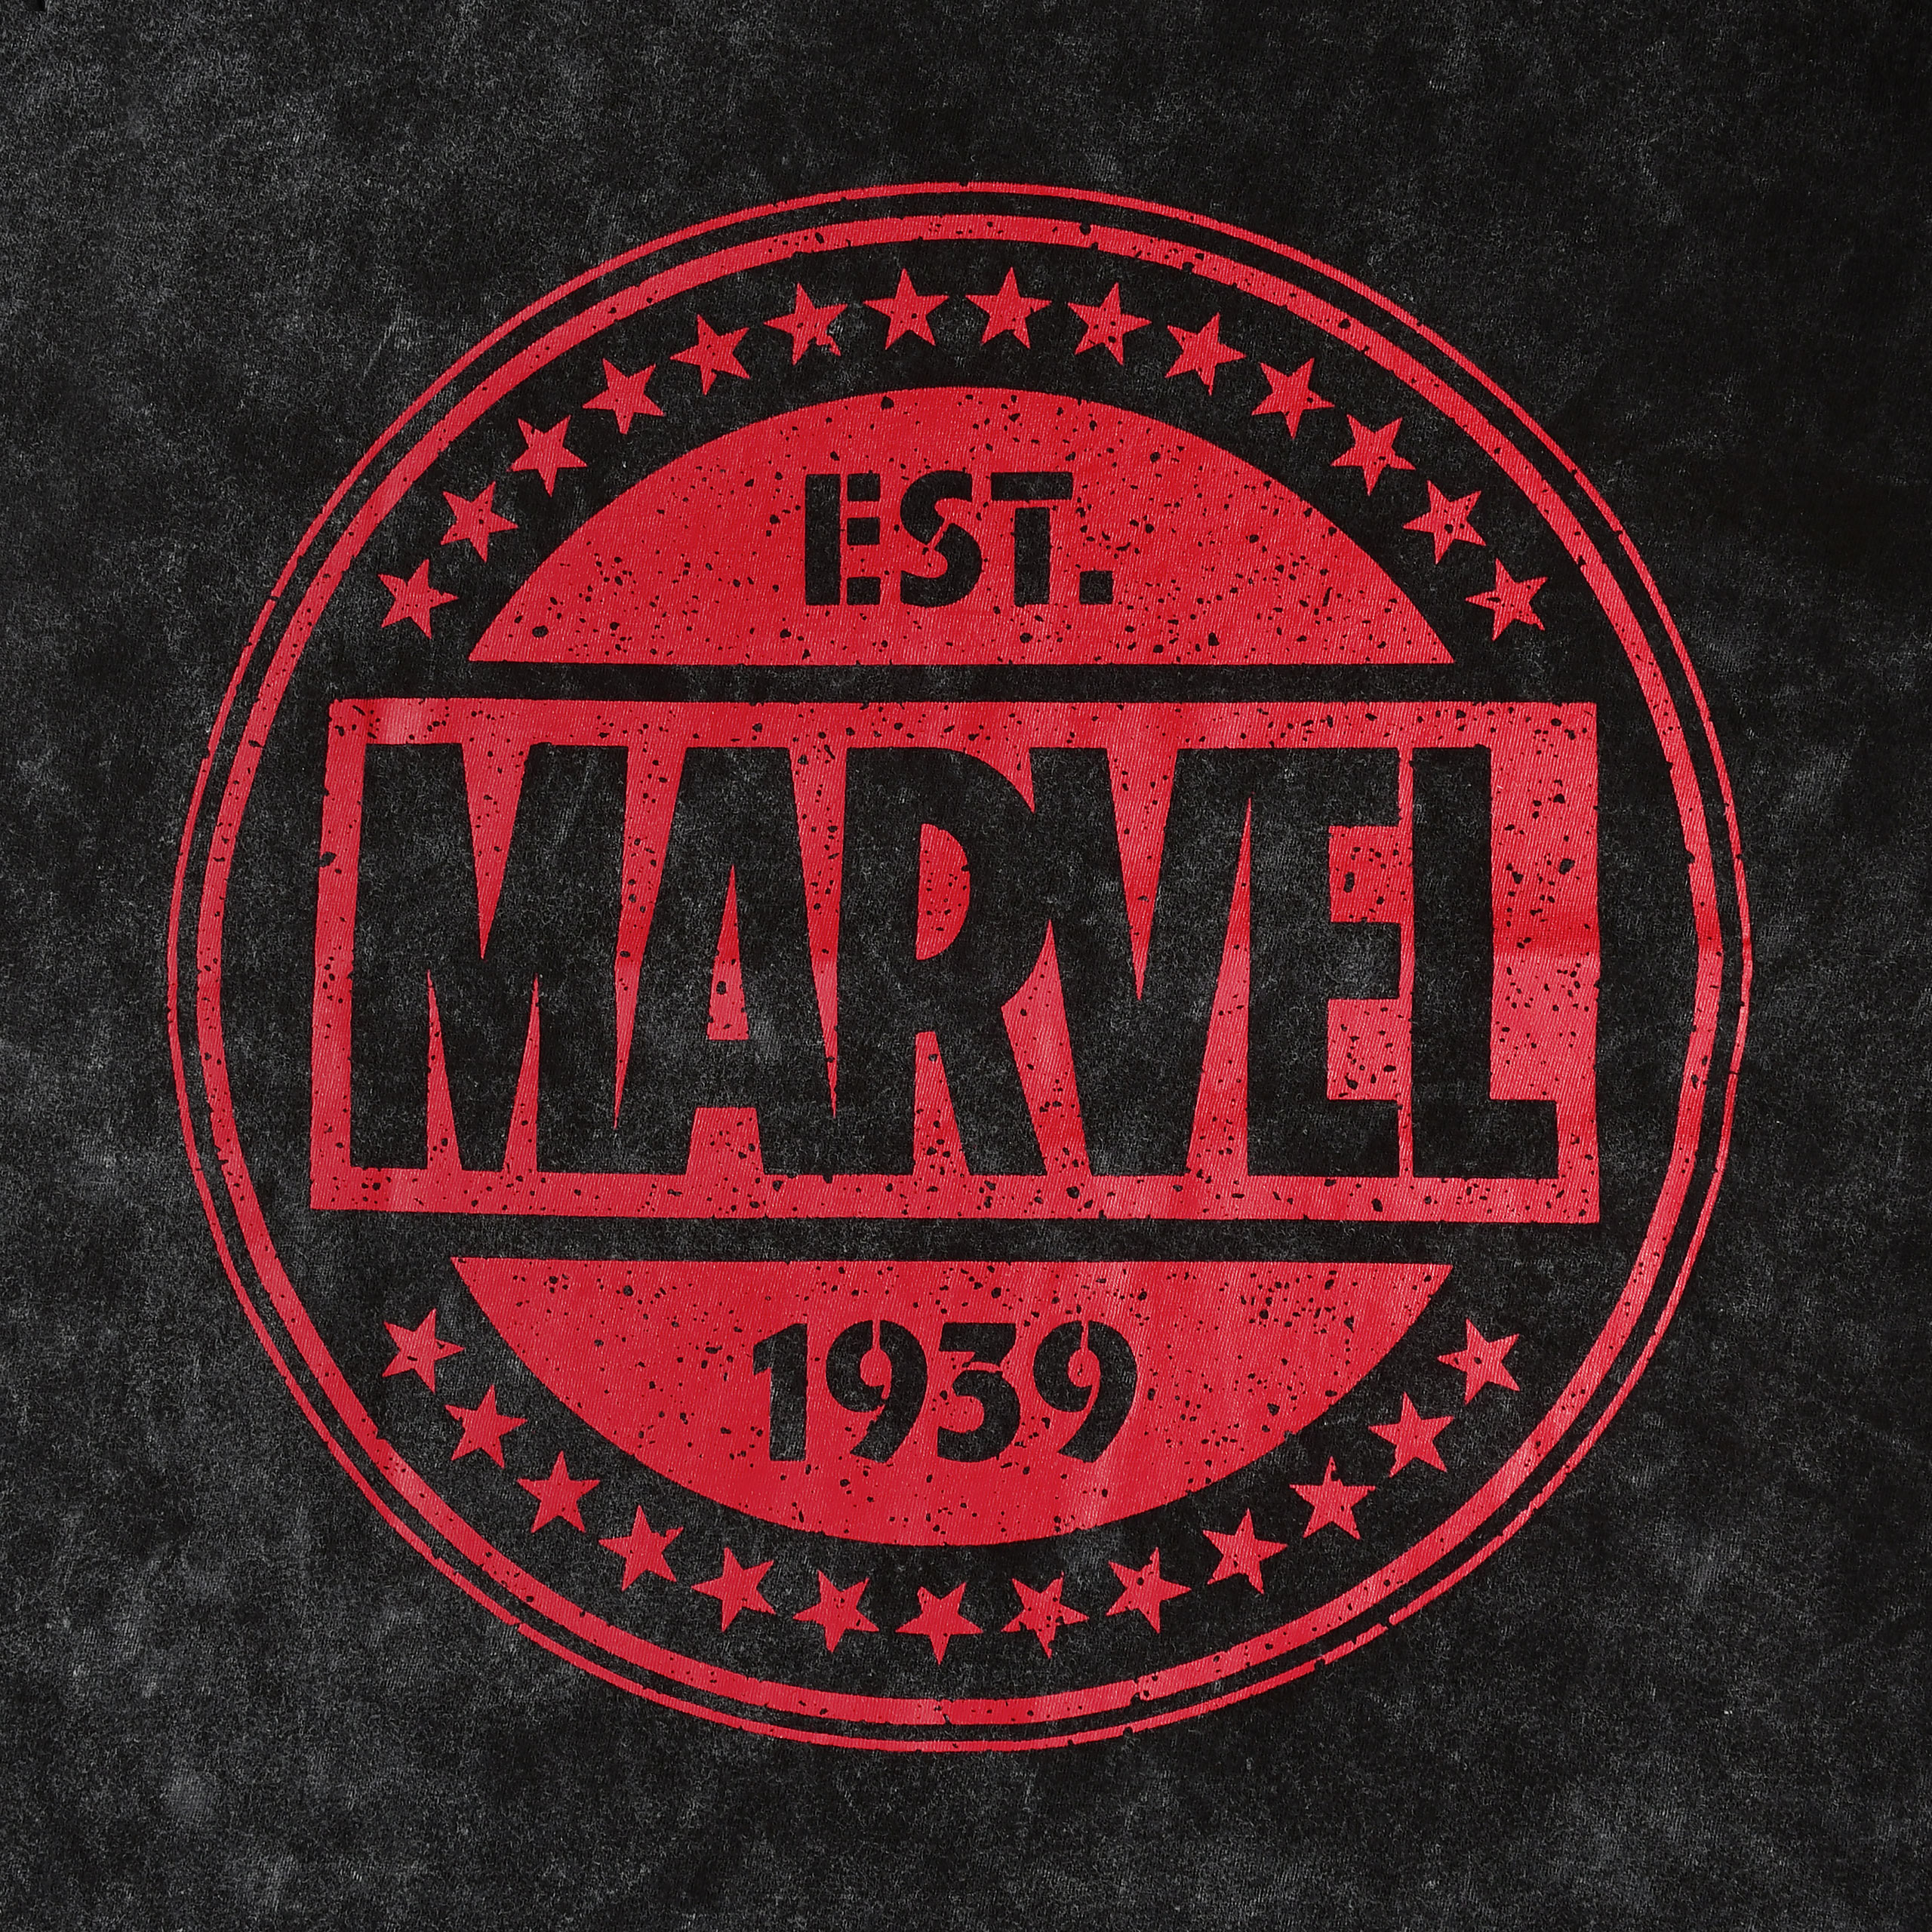 Marvel 1939 T-Shirt schwarz